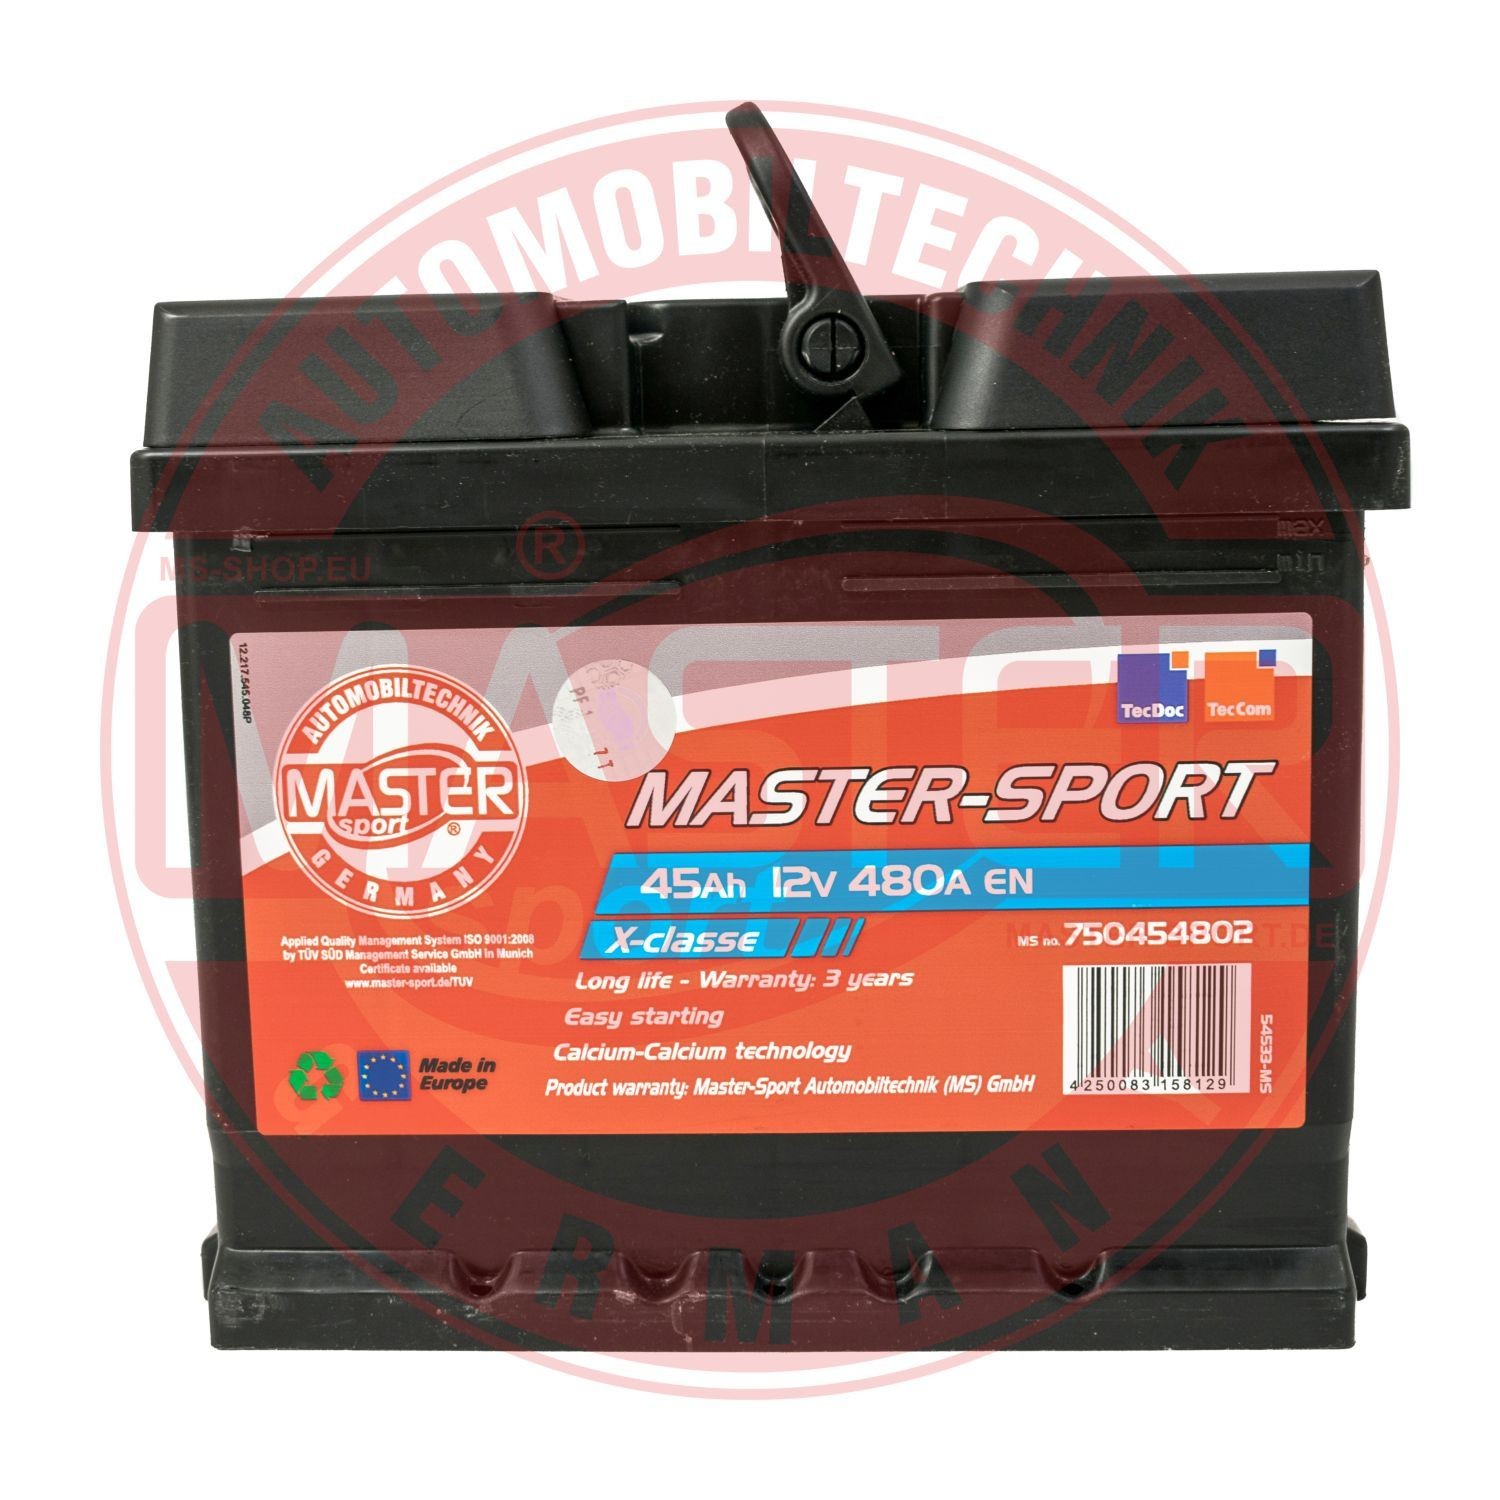 780454802 MASTER-SPORT Car battery Volkswagen GOLF review